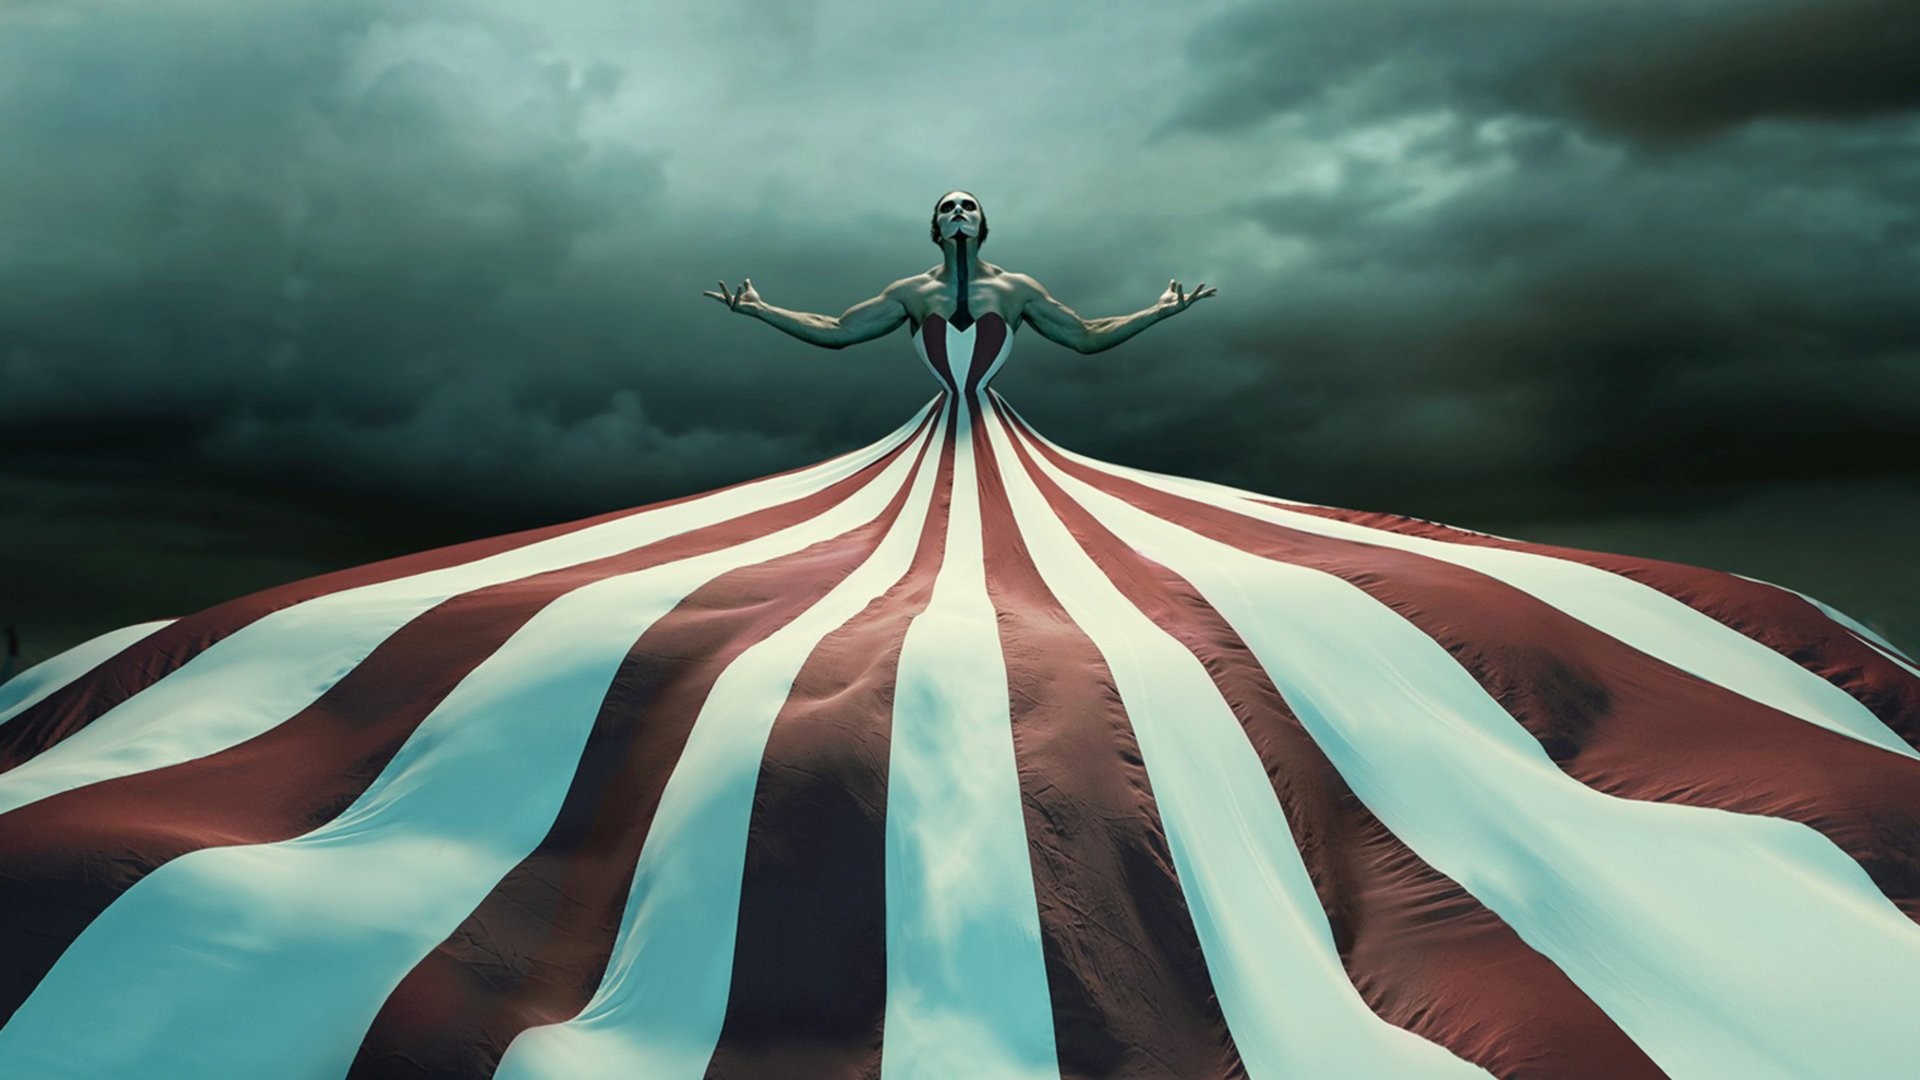 American Horror Story - Freak Show Ahs Poster - HD Wallpaper 